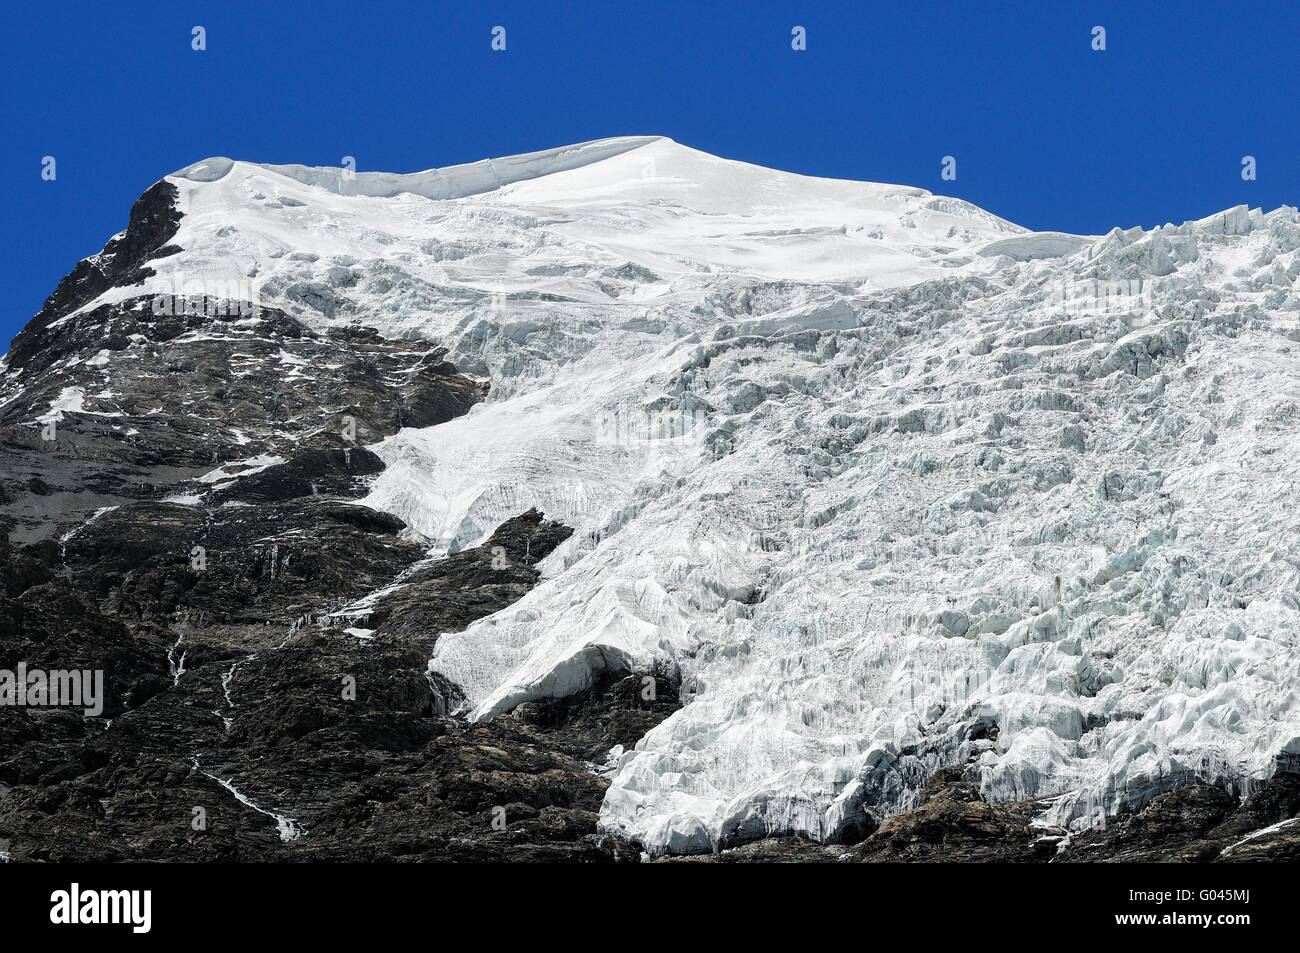 Karola glacier with ice and rock Tibet China Stock Photo